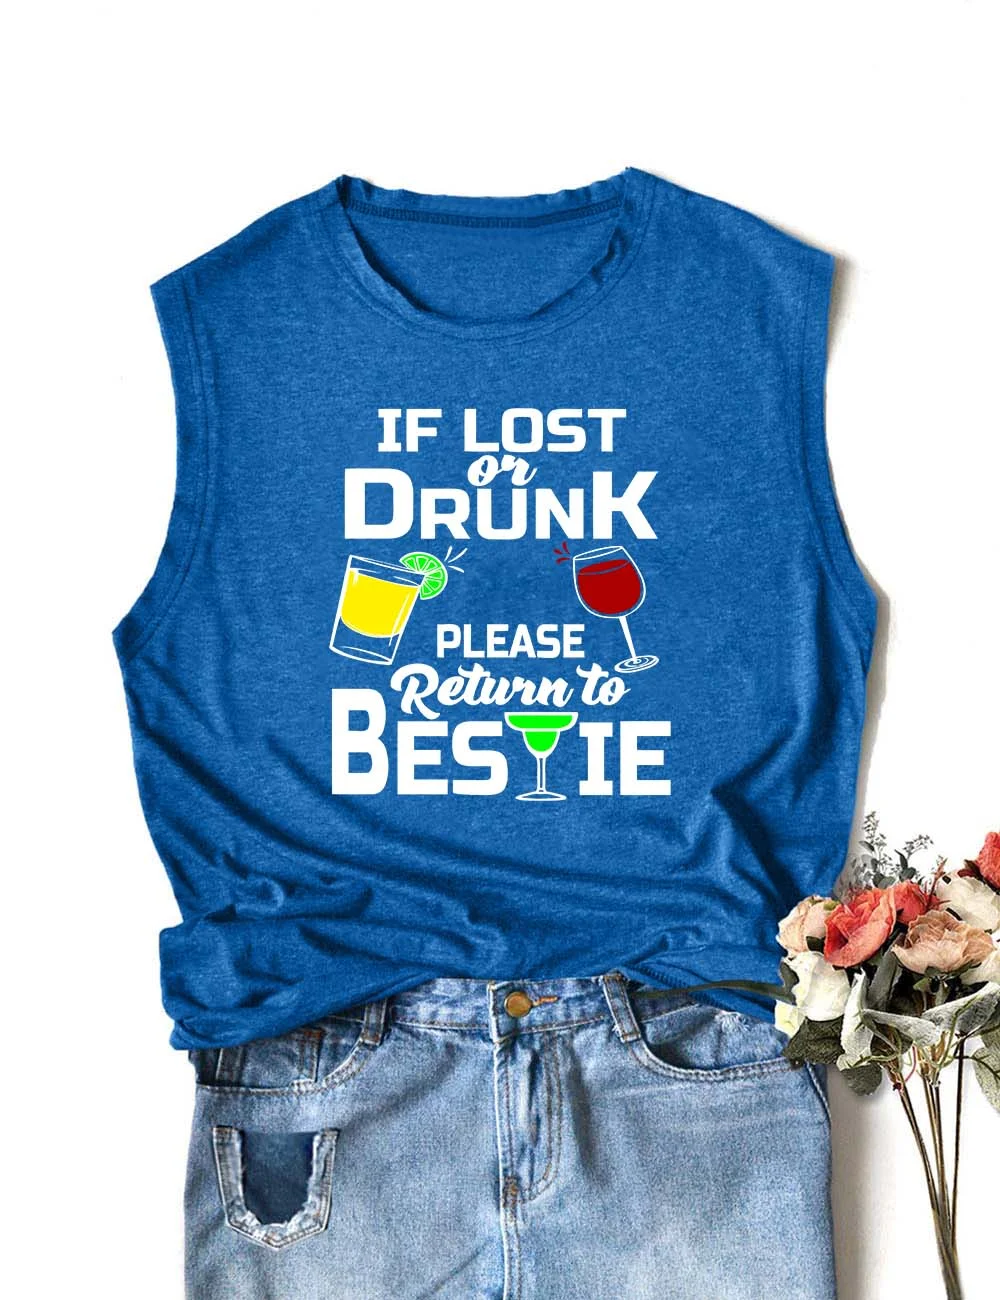 If Lost Or Drunk Please Return To Bestie Tank